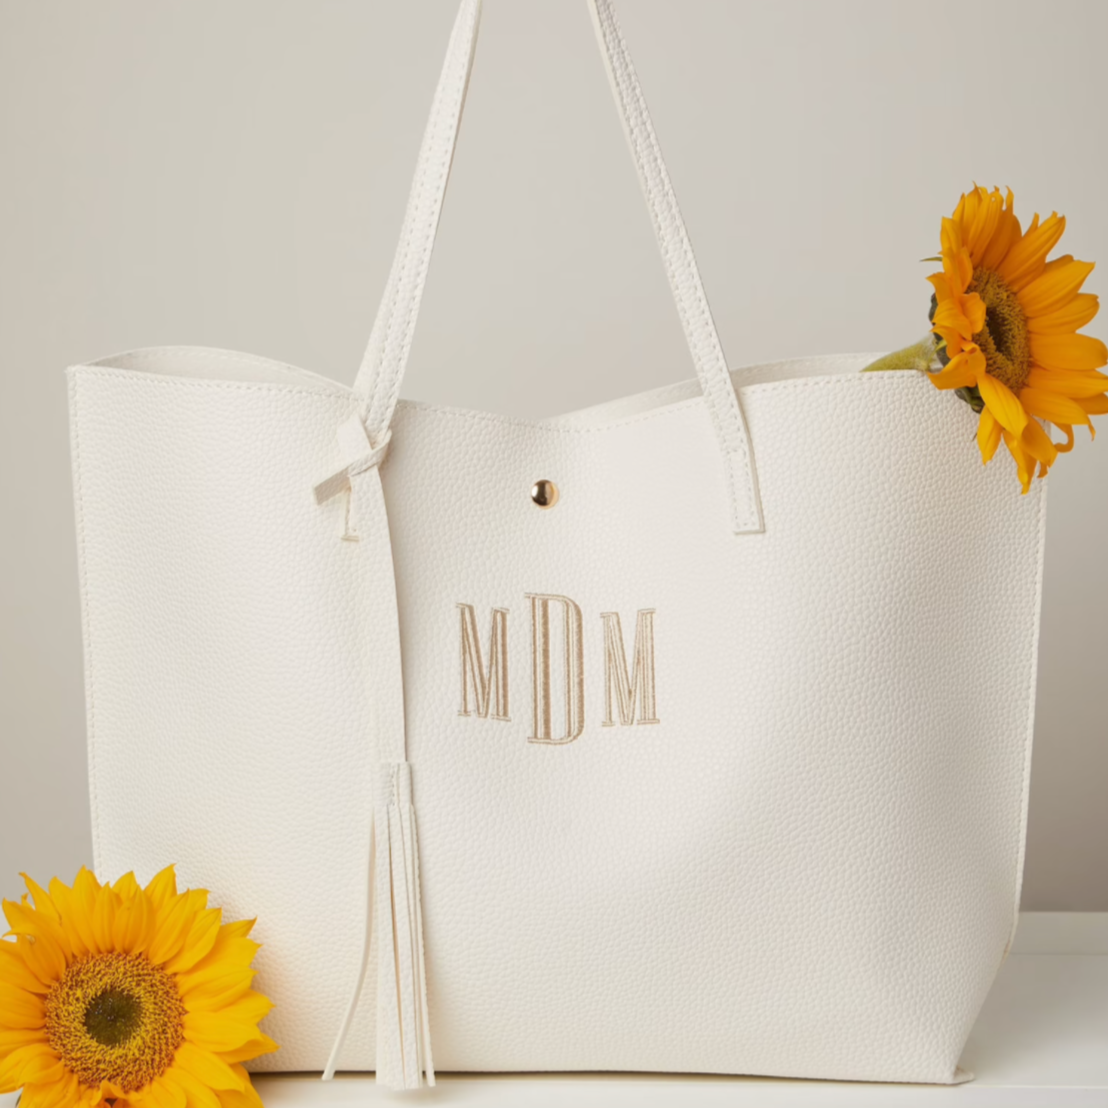 Totes a Bridesmaid Bridal Party Canvas Tote Bags – Rich Design Co